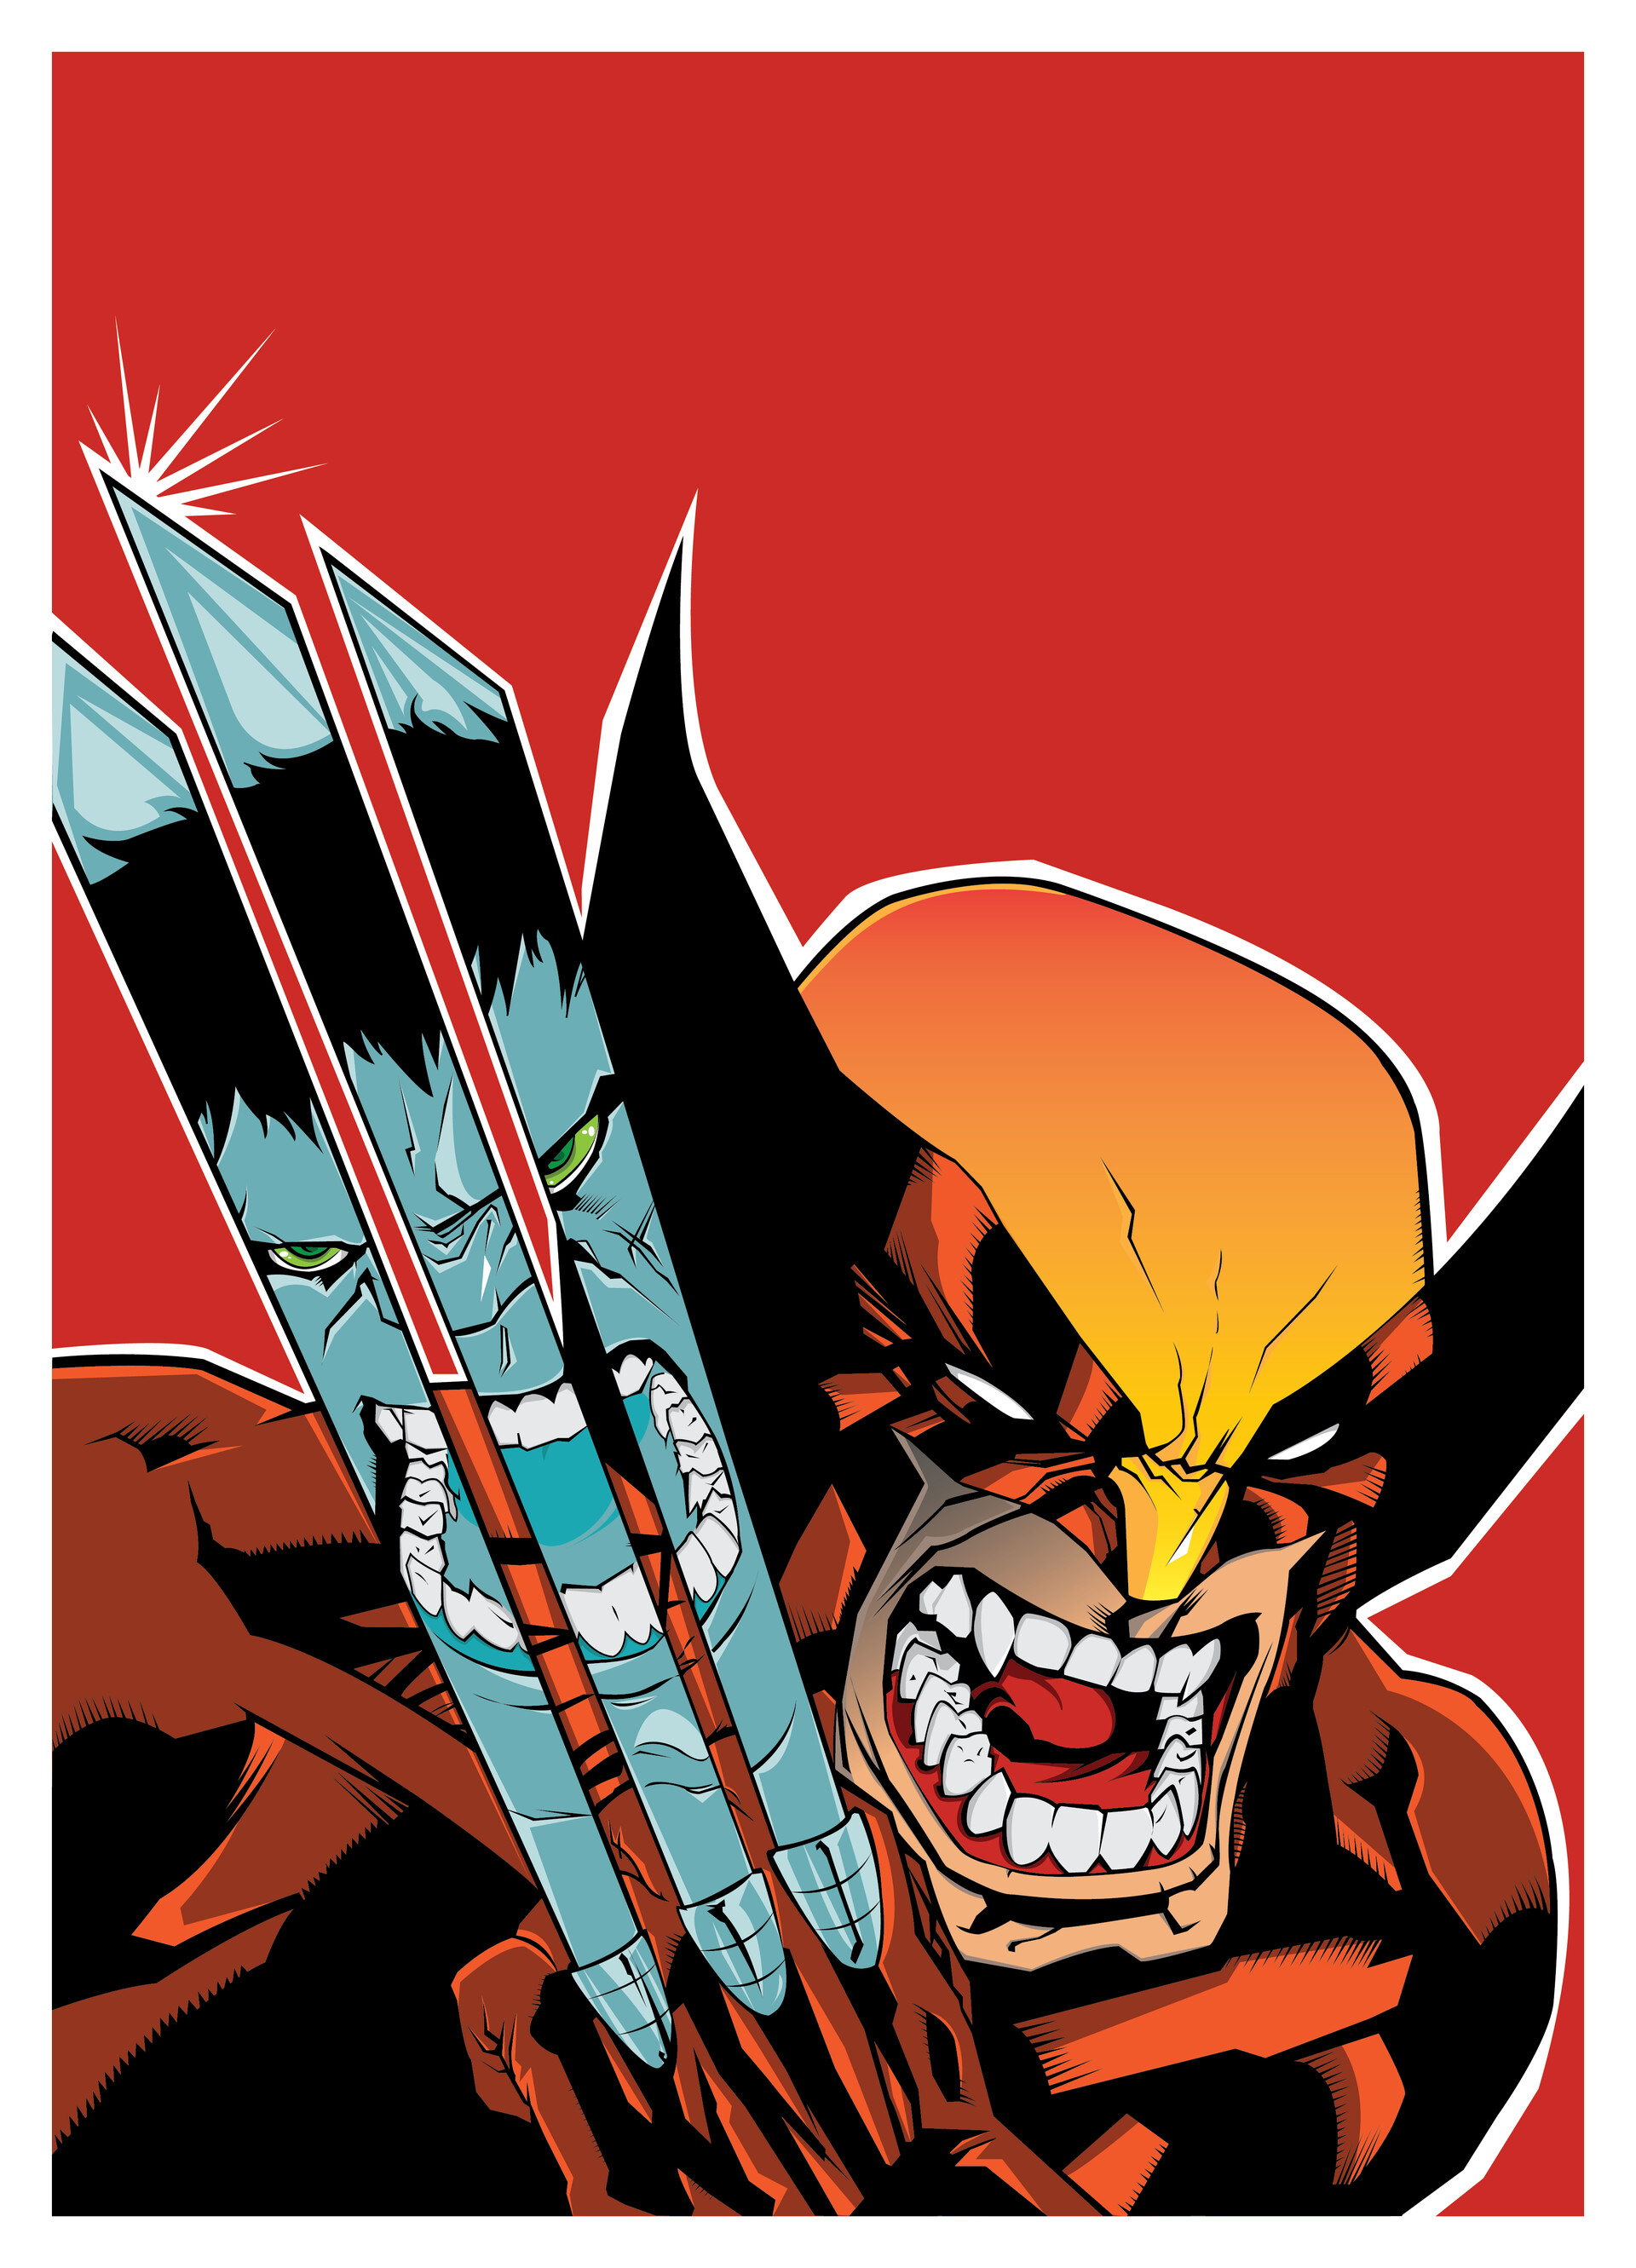 ArtStation - Wolverine vs The Incredible Hulk